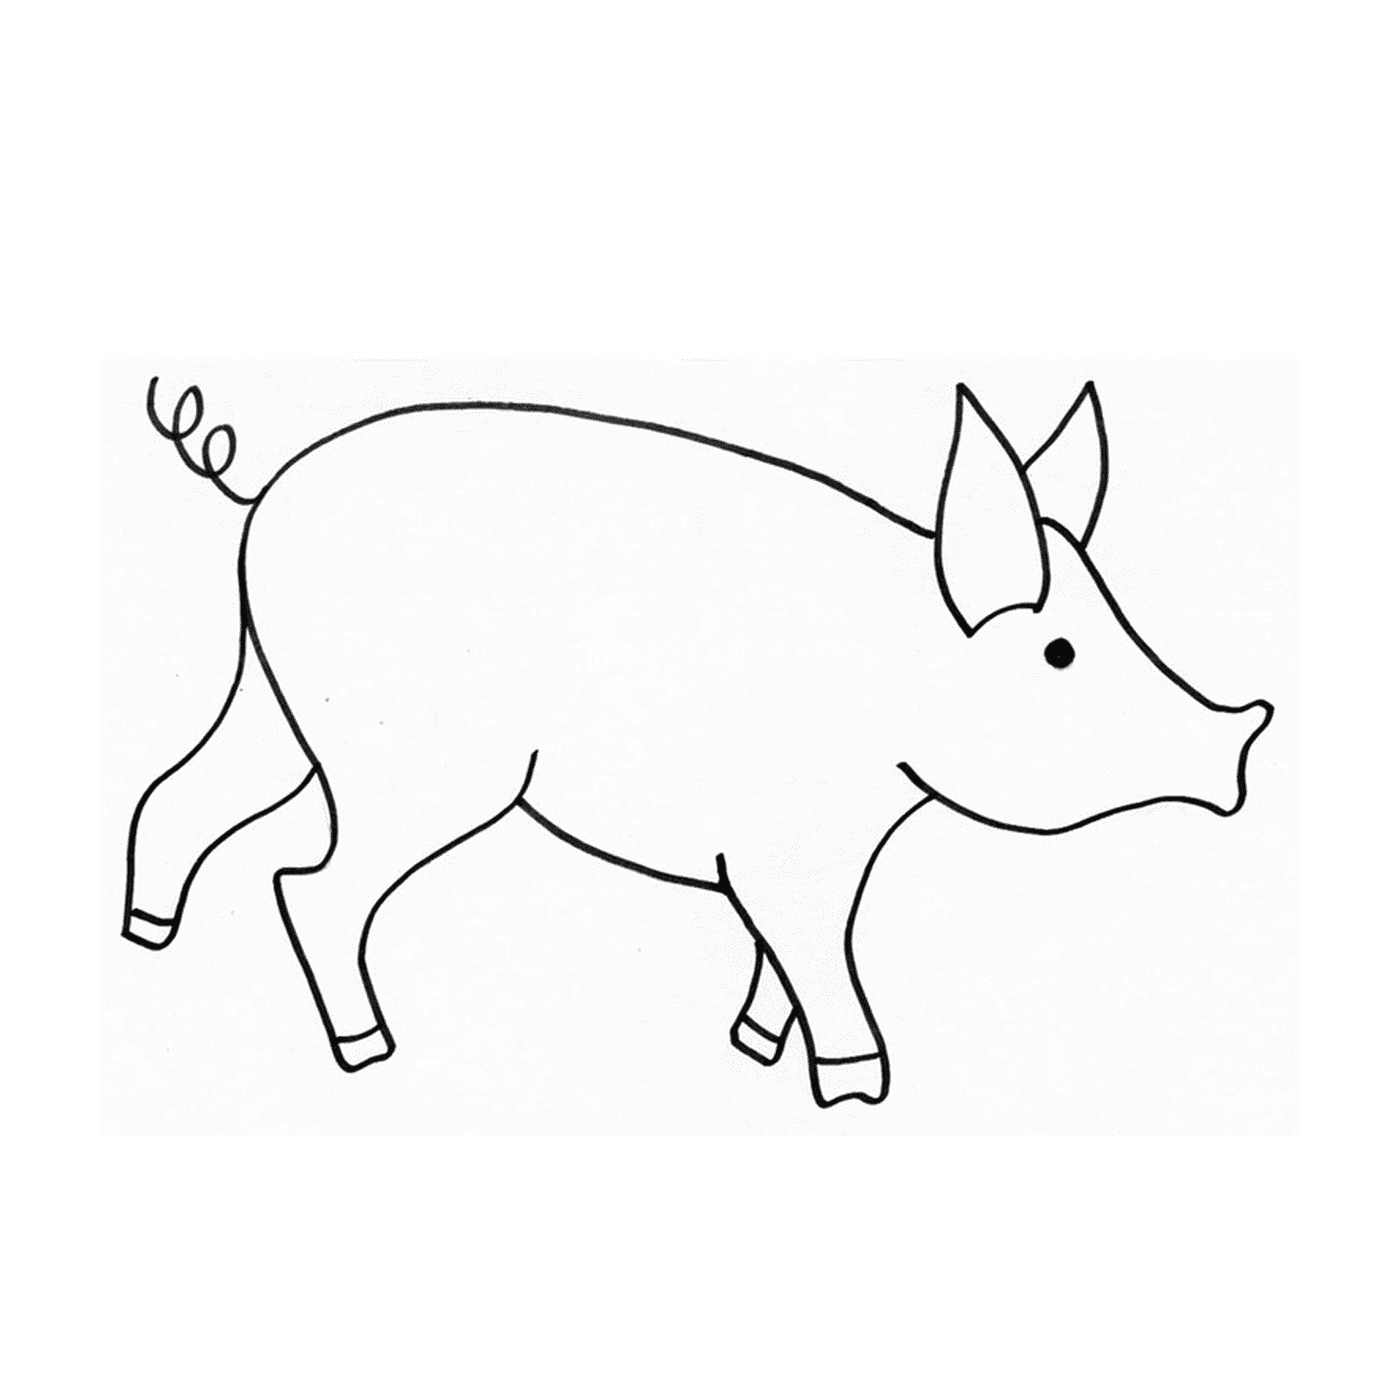   Un cochon nain dans un style de dessin 